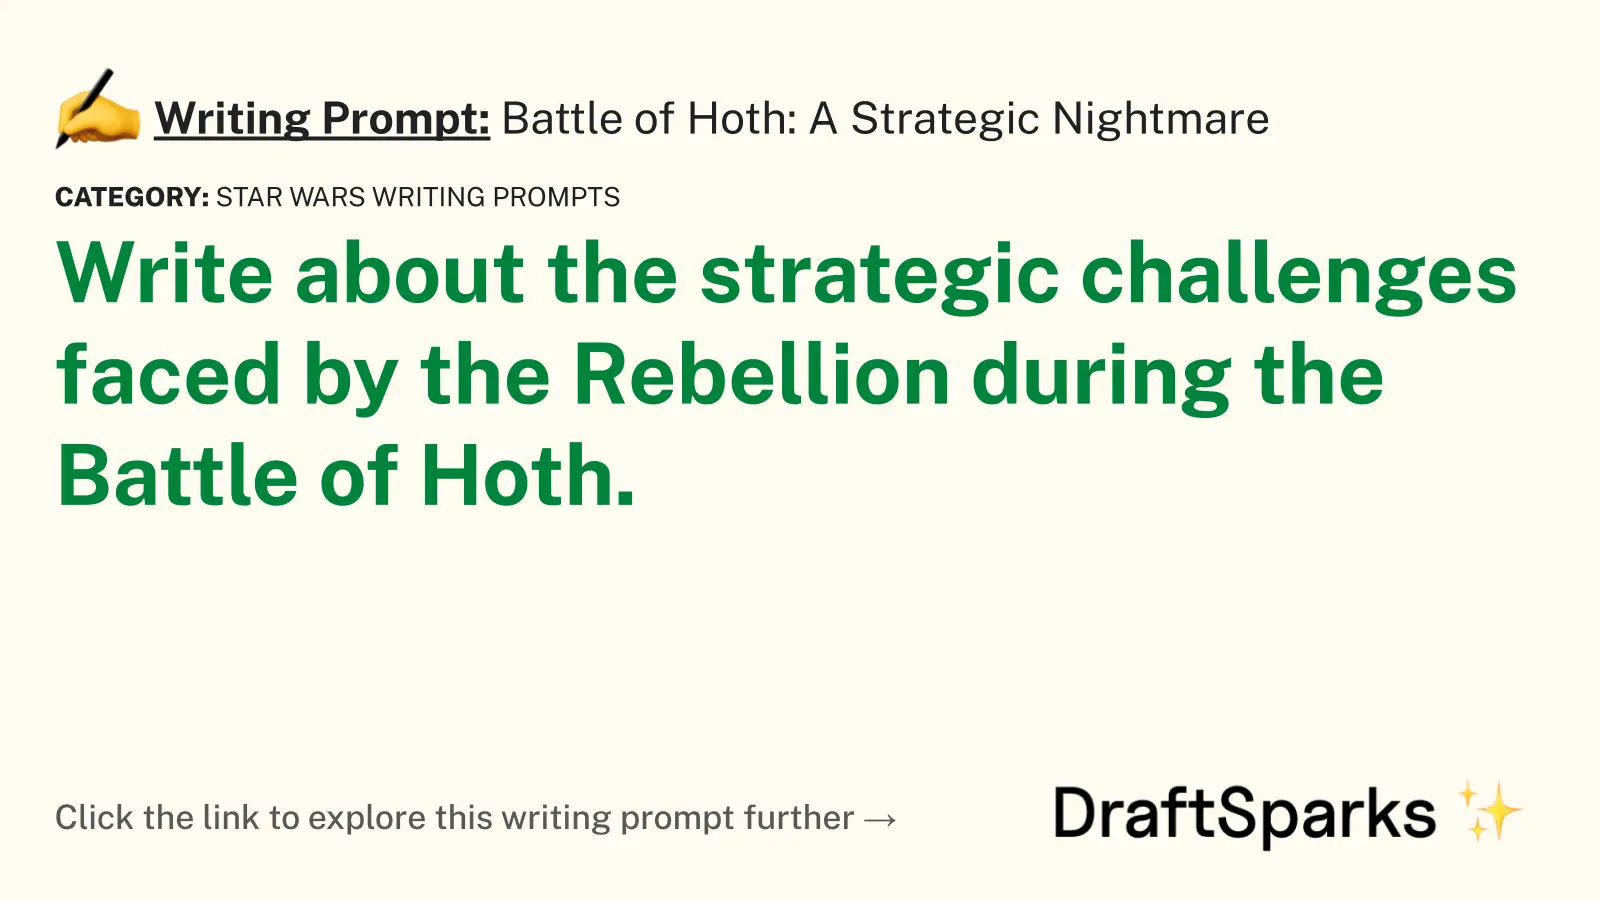 Battle of Hoth: A Strategic Nightmare